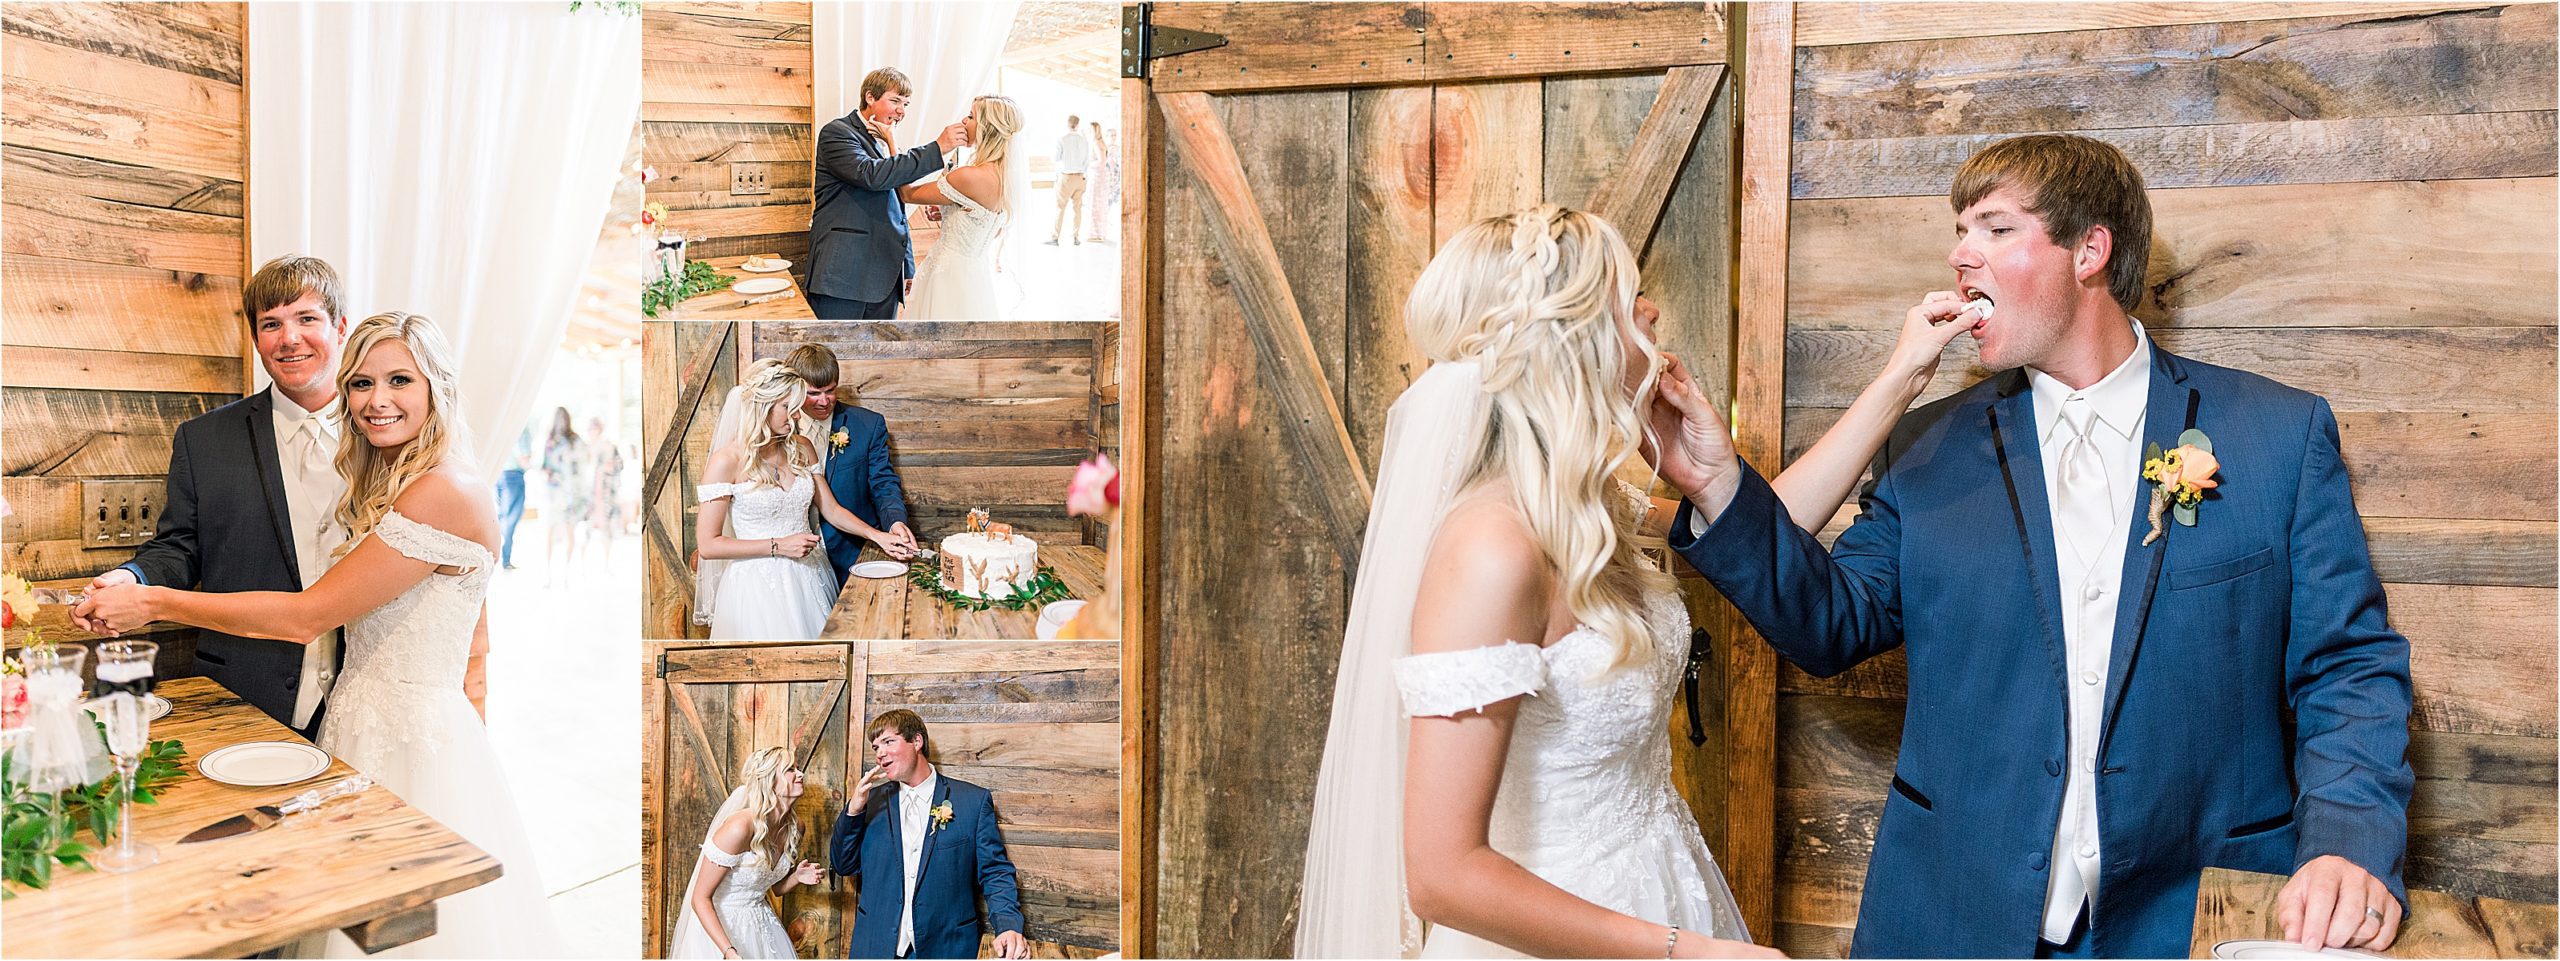 Cypress Pond Farms,Georgia Wedding Photography,Light & Airy Wedding Photography,Rachel Linder Photography,Savannah Macon Atlanta Wedding Photographer,